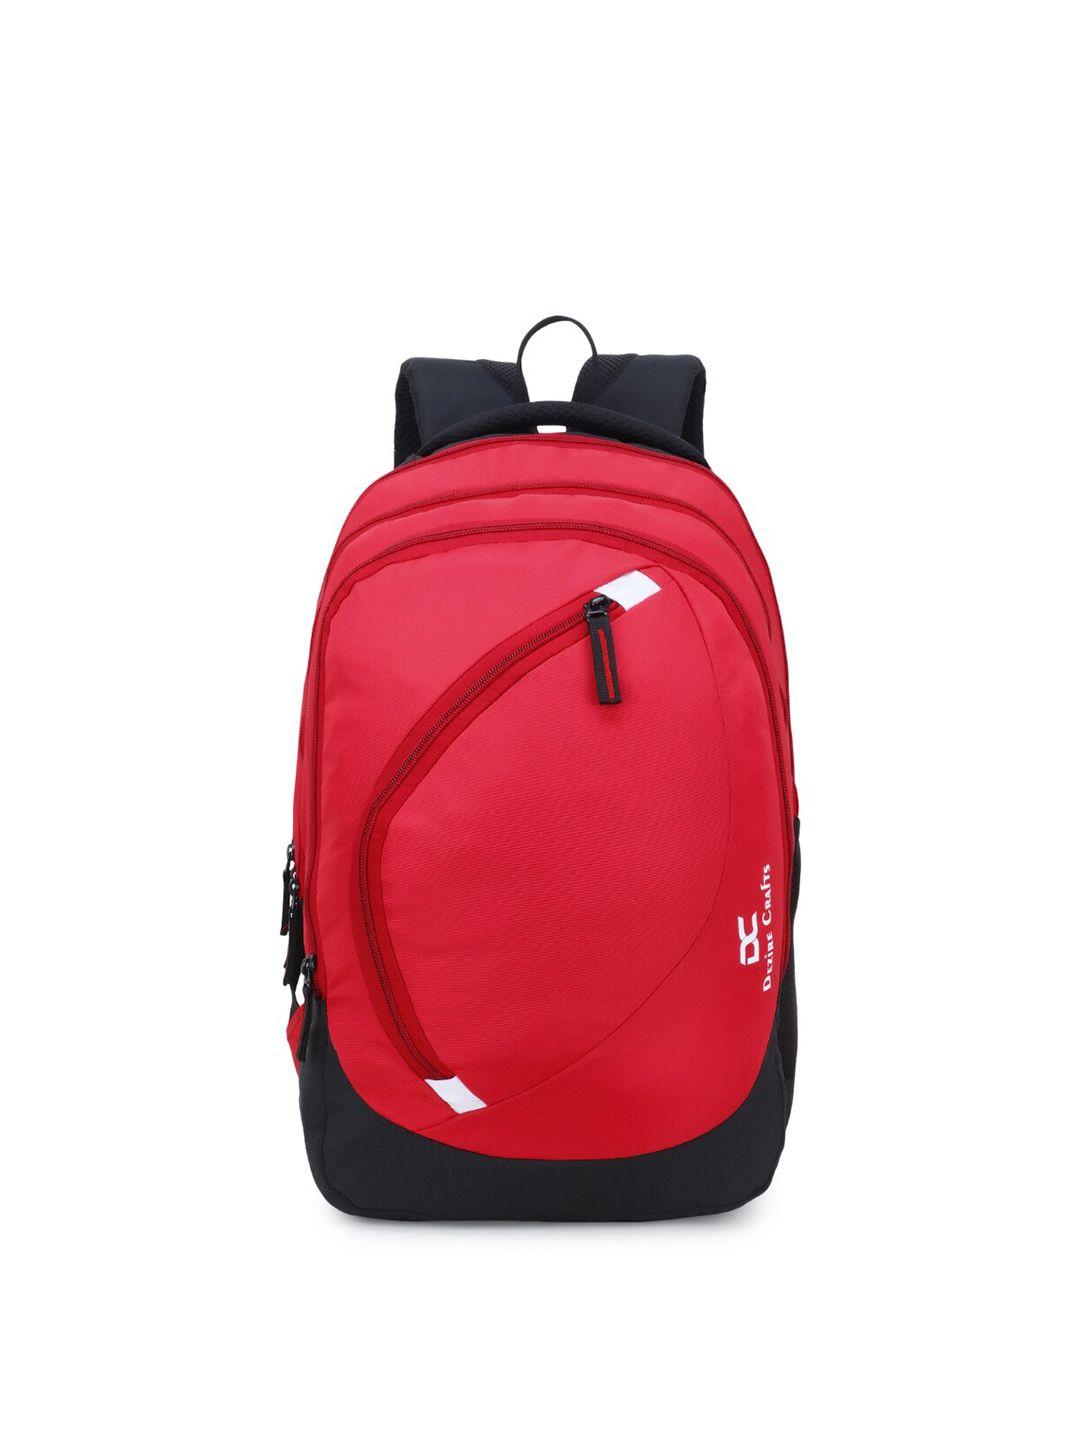 dezire crafts unisex red & black solid backpack